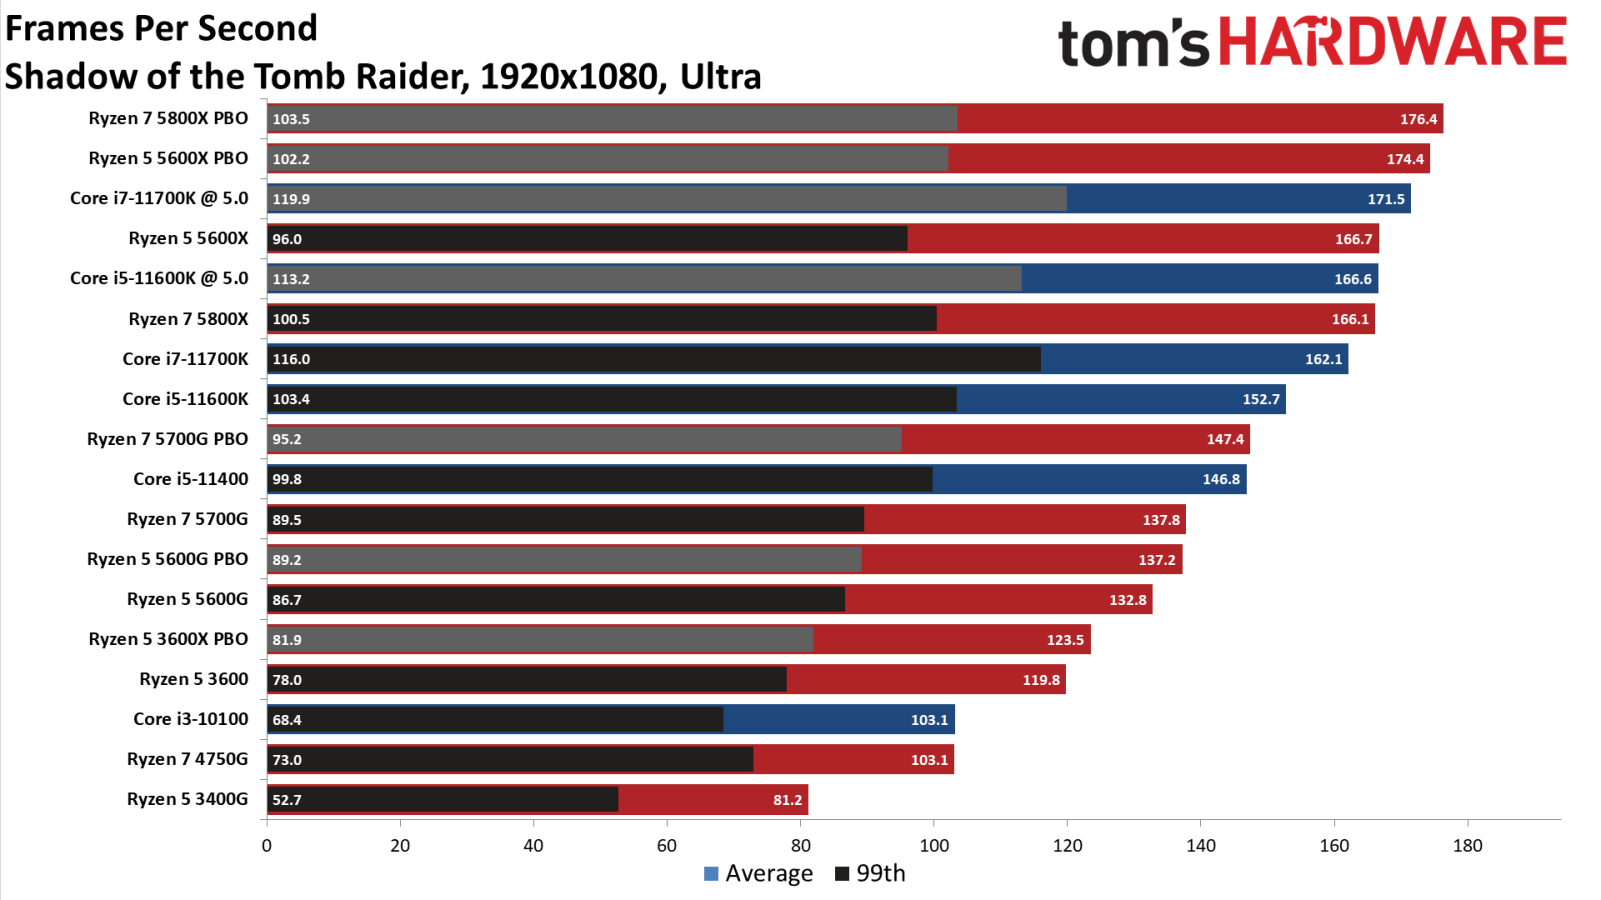 Ryzen 7 5700G: Shadow of the Tomb Raider RTX 3090 1080p/Ultra